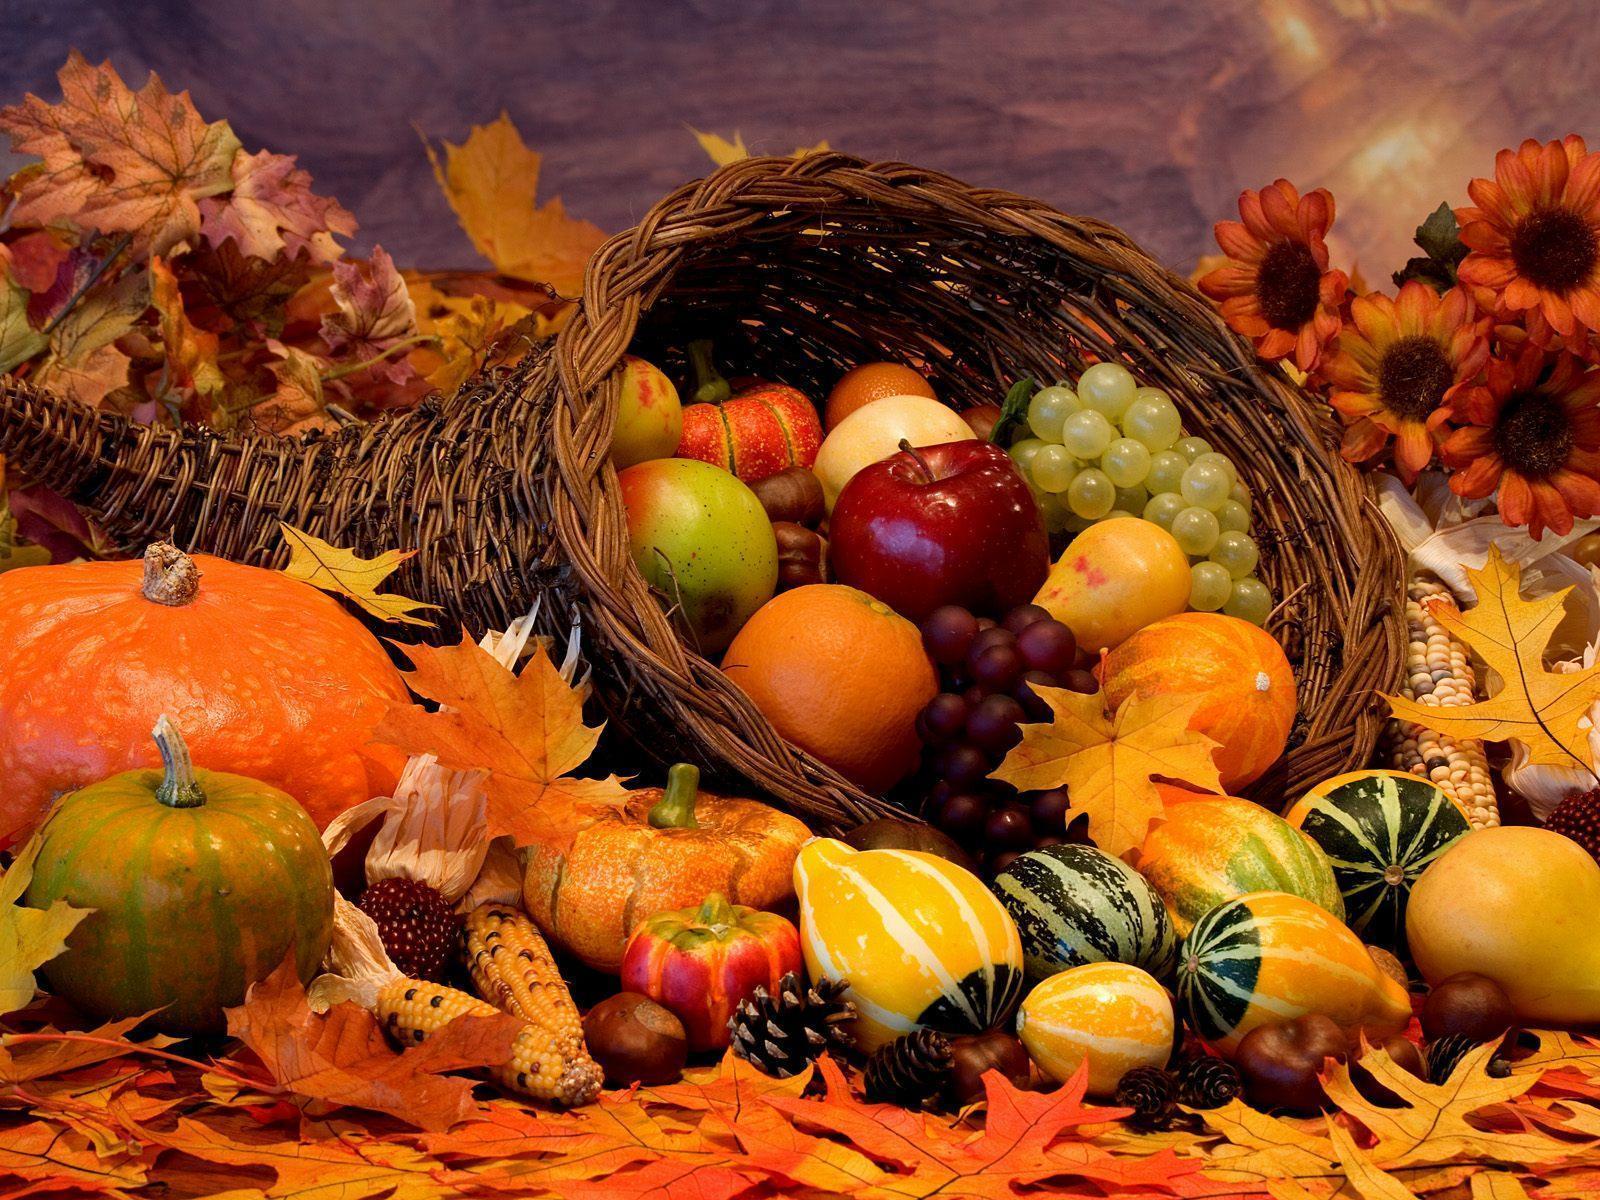 Autumn gifts free desktop background wallpaper image